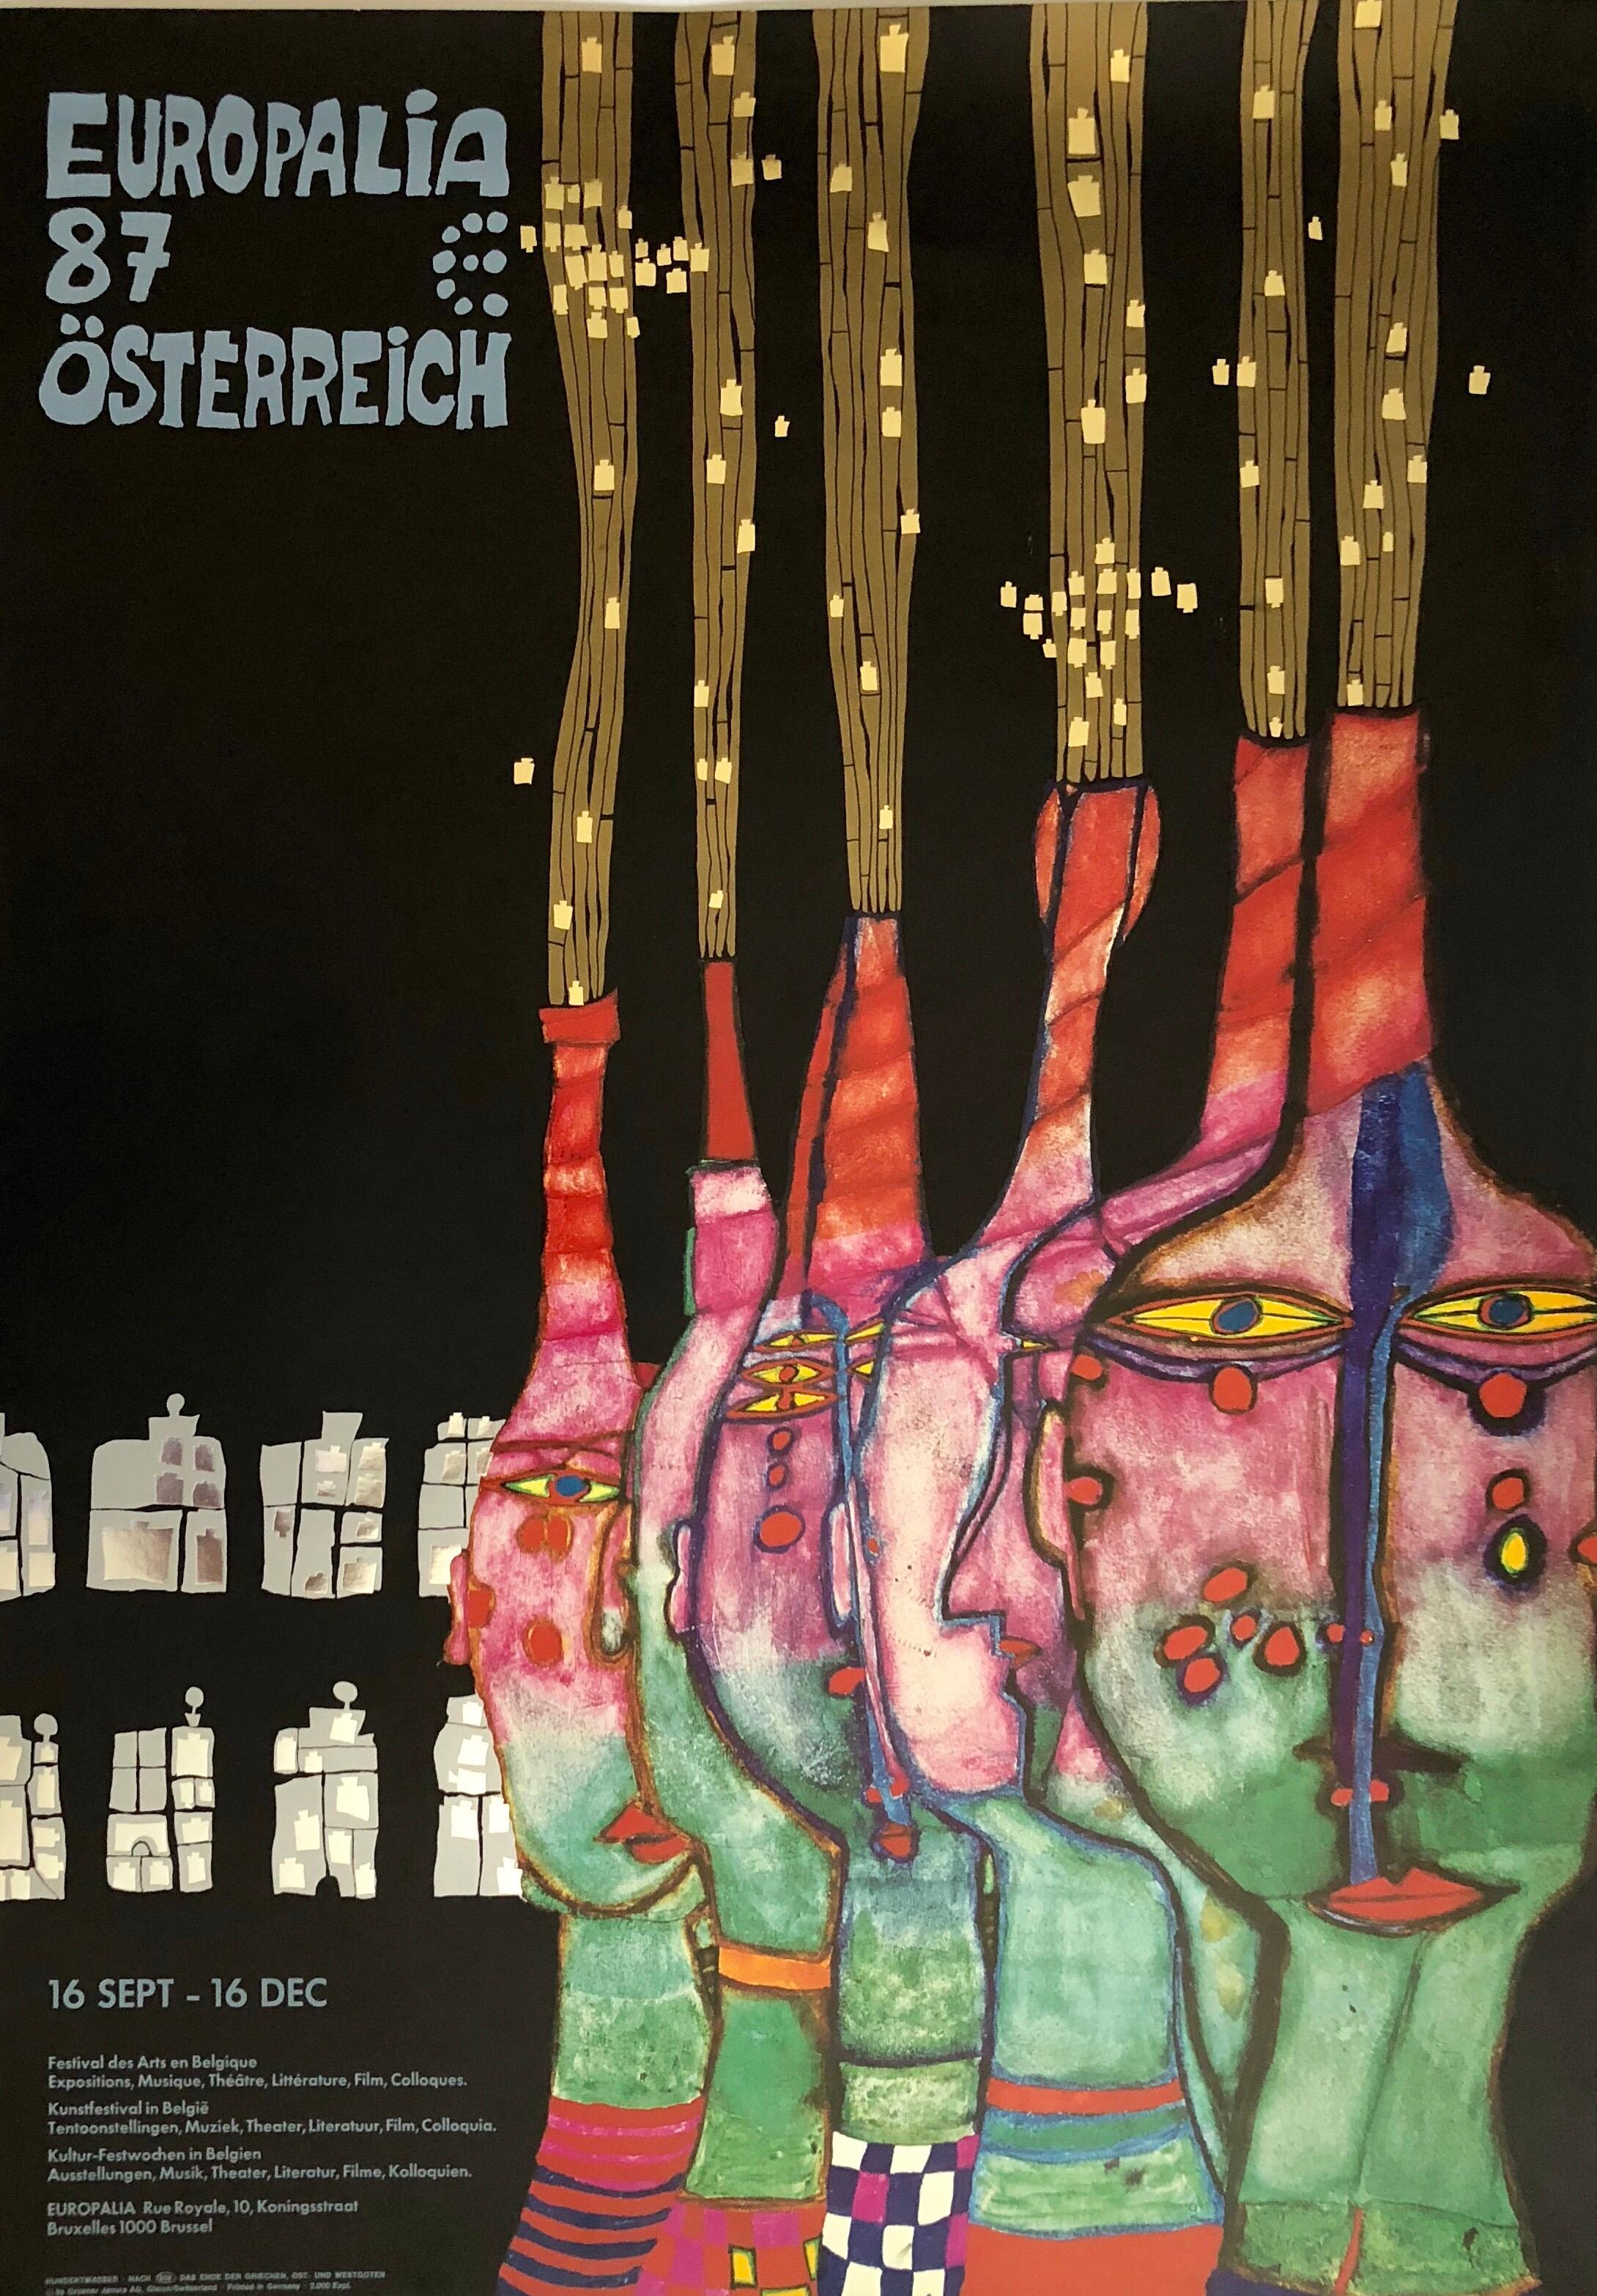 Abstract Print Friedensreich Hundertwasser - Affiche de lithographie offset Europalia 87 Osterreich en métal imprimé feuille